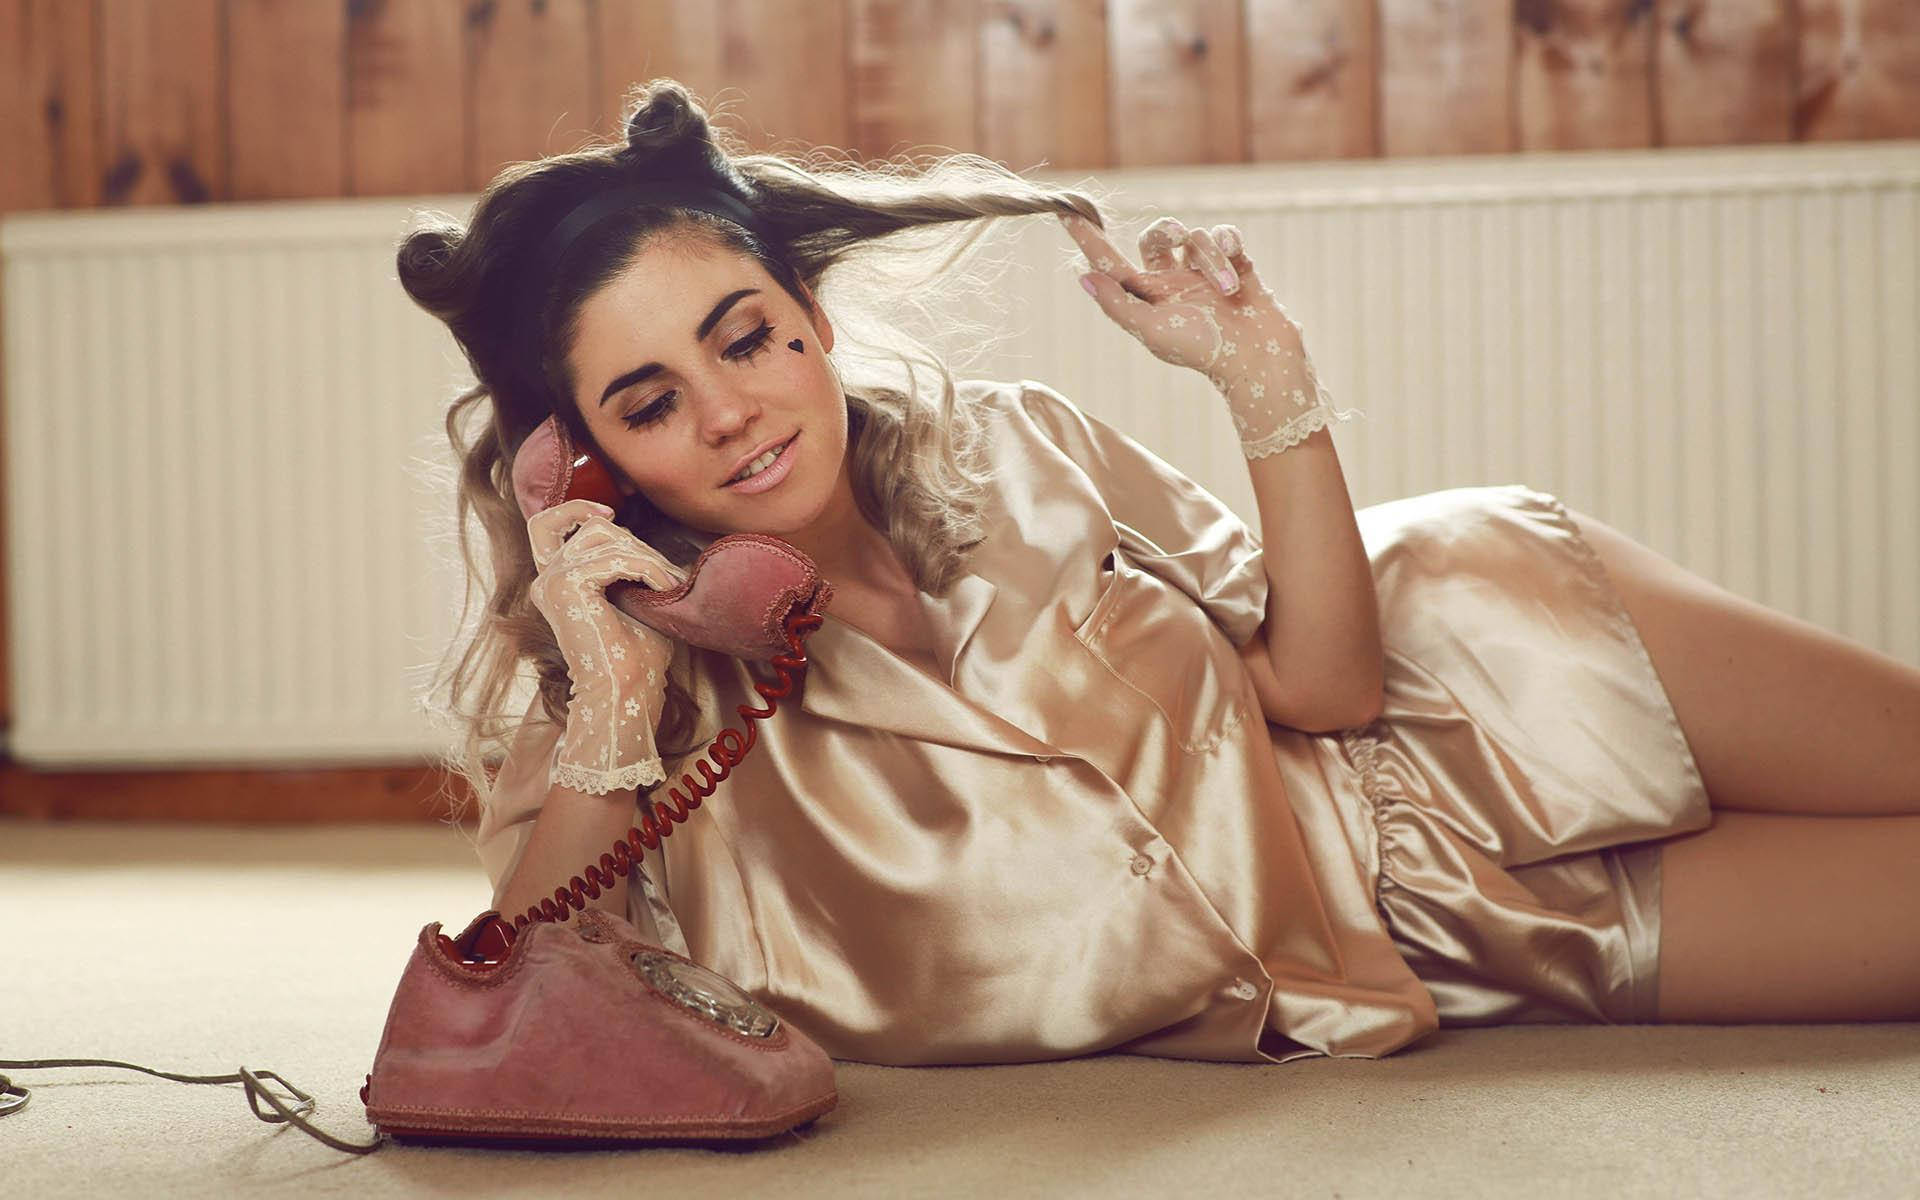 Singer-songwriter Marina And The Diamonds In A Sleek Sleepwear Look Background